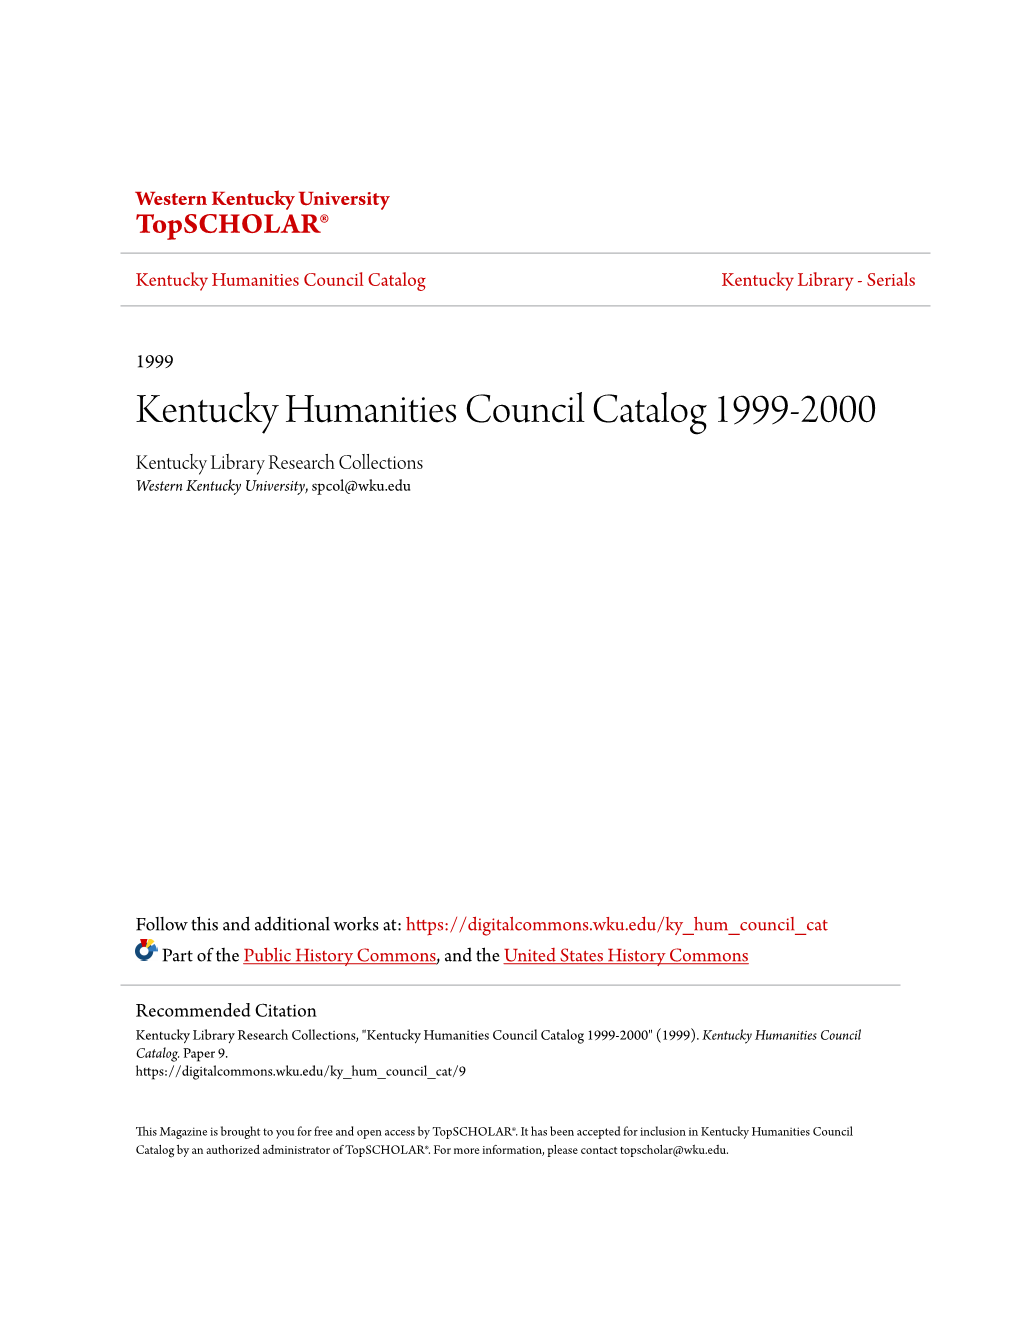 Kentucky Humanities Council Catalog 1999-2000 Kentucky Library Research Collections Western Kentucky University, Spcol@Wku.Edu